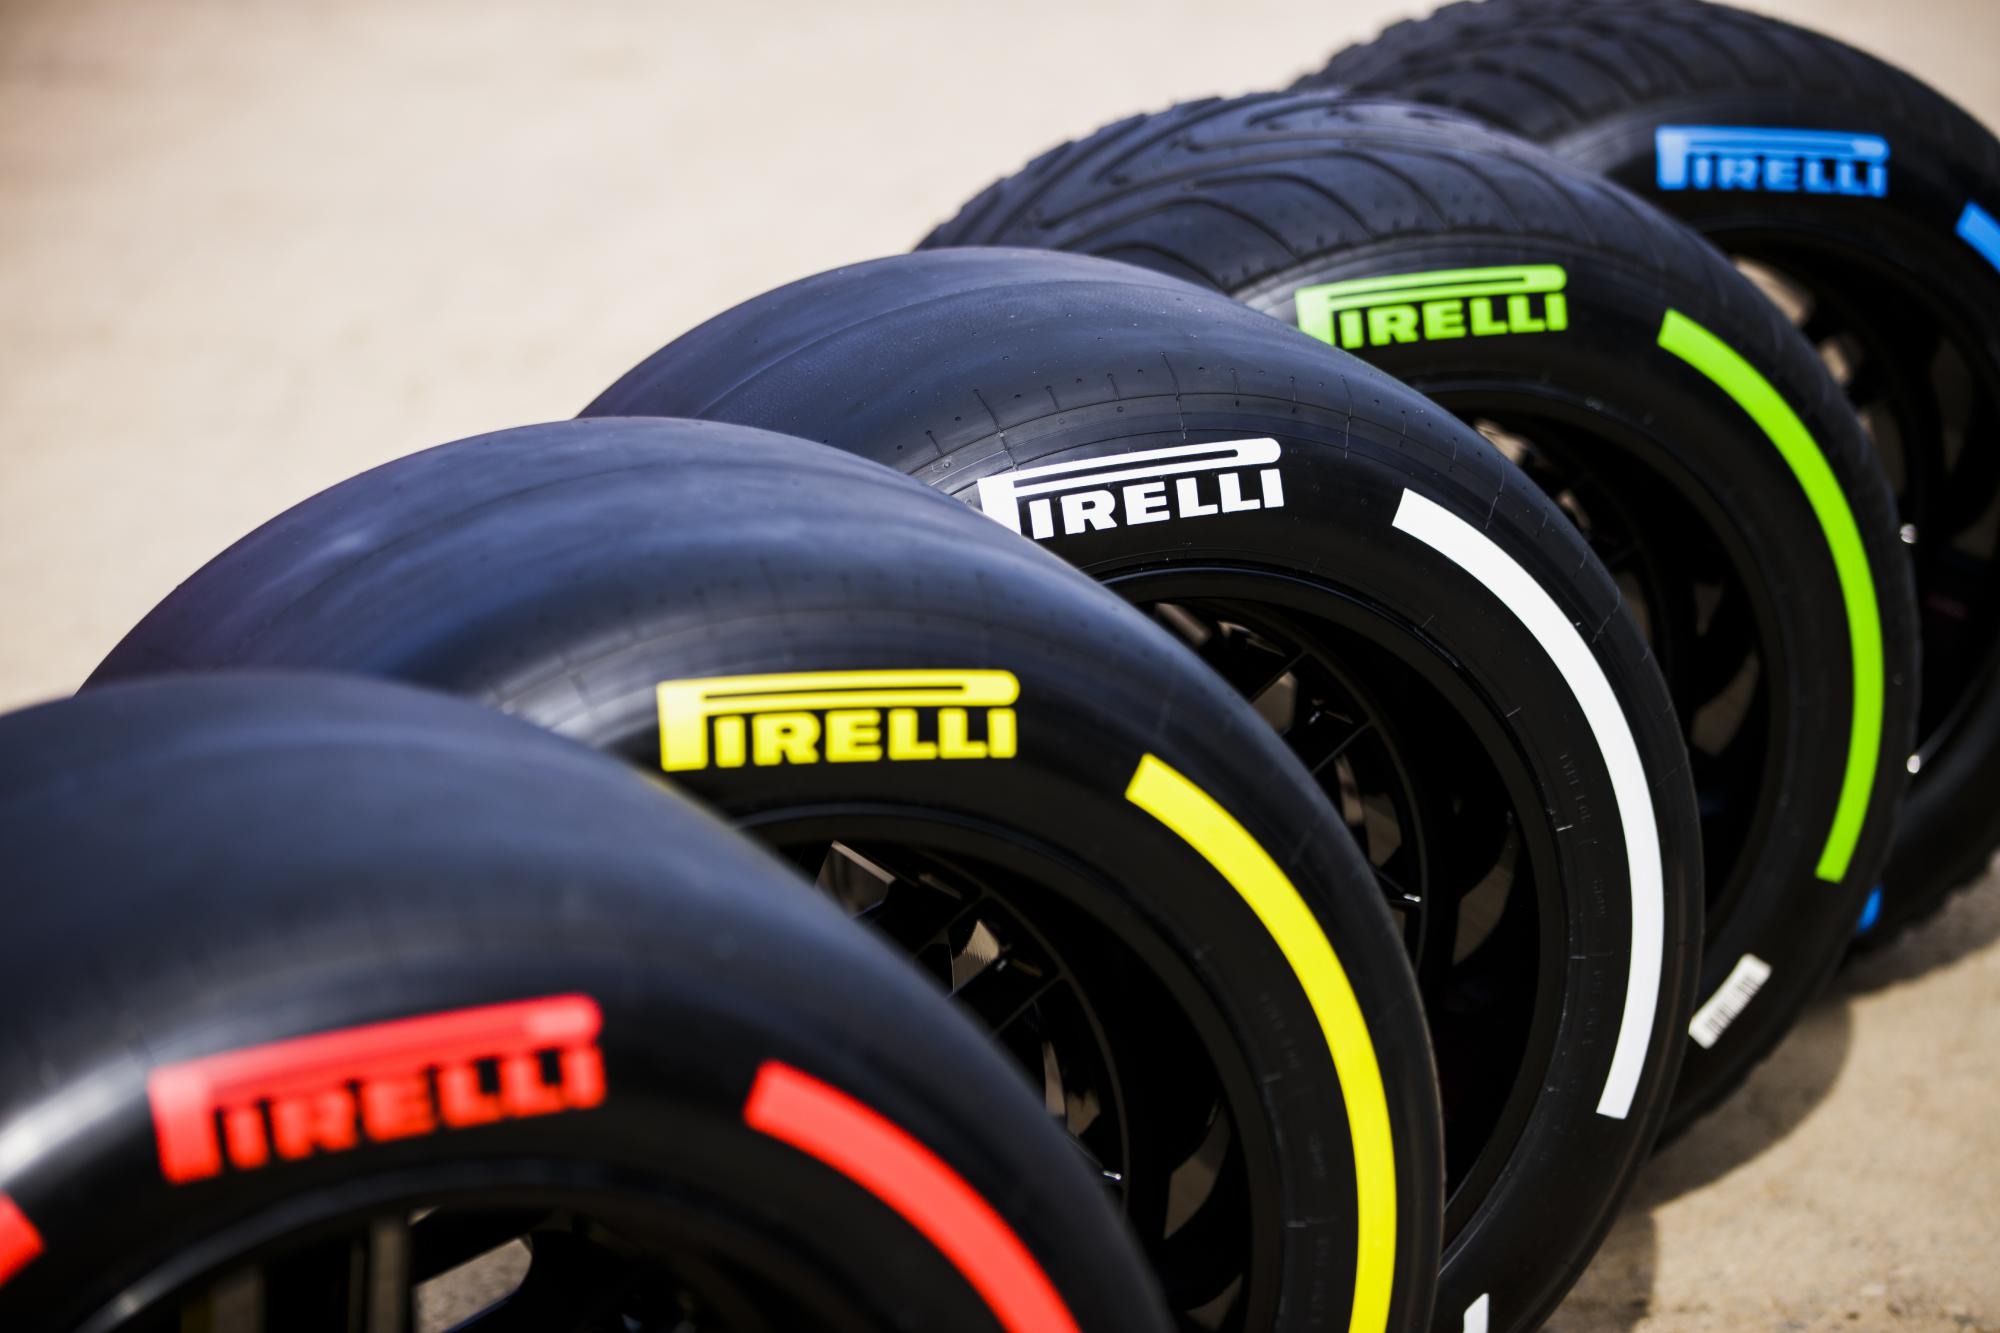 Neumáticos Pirelli: calidad, rendimiento e innovación 2